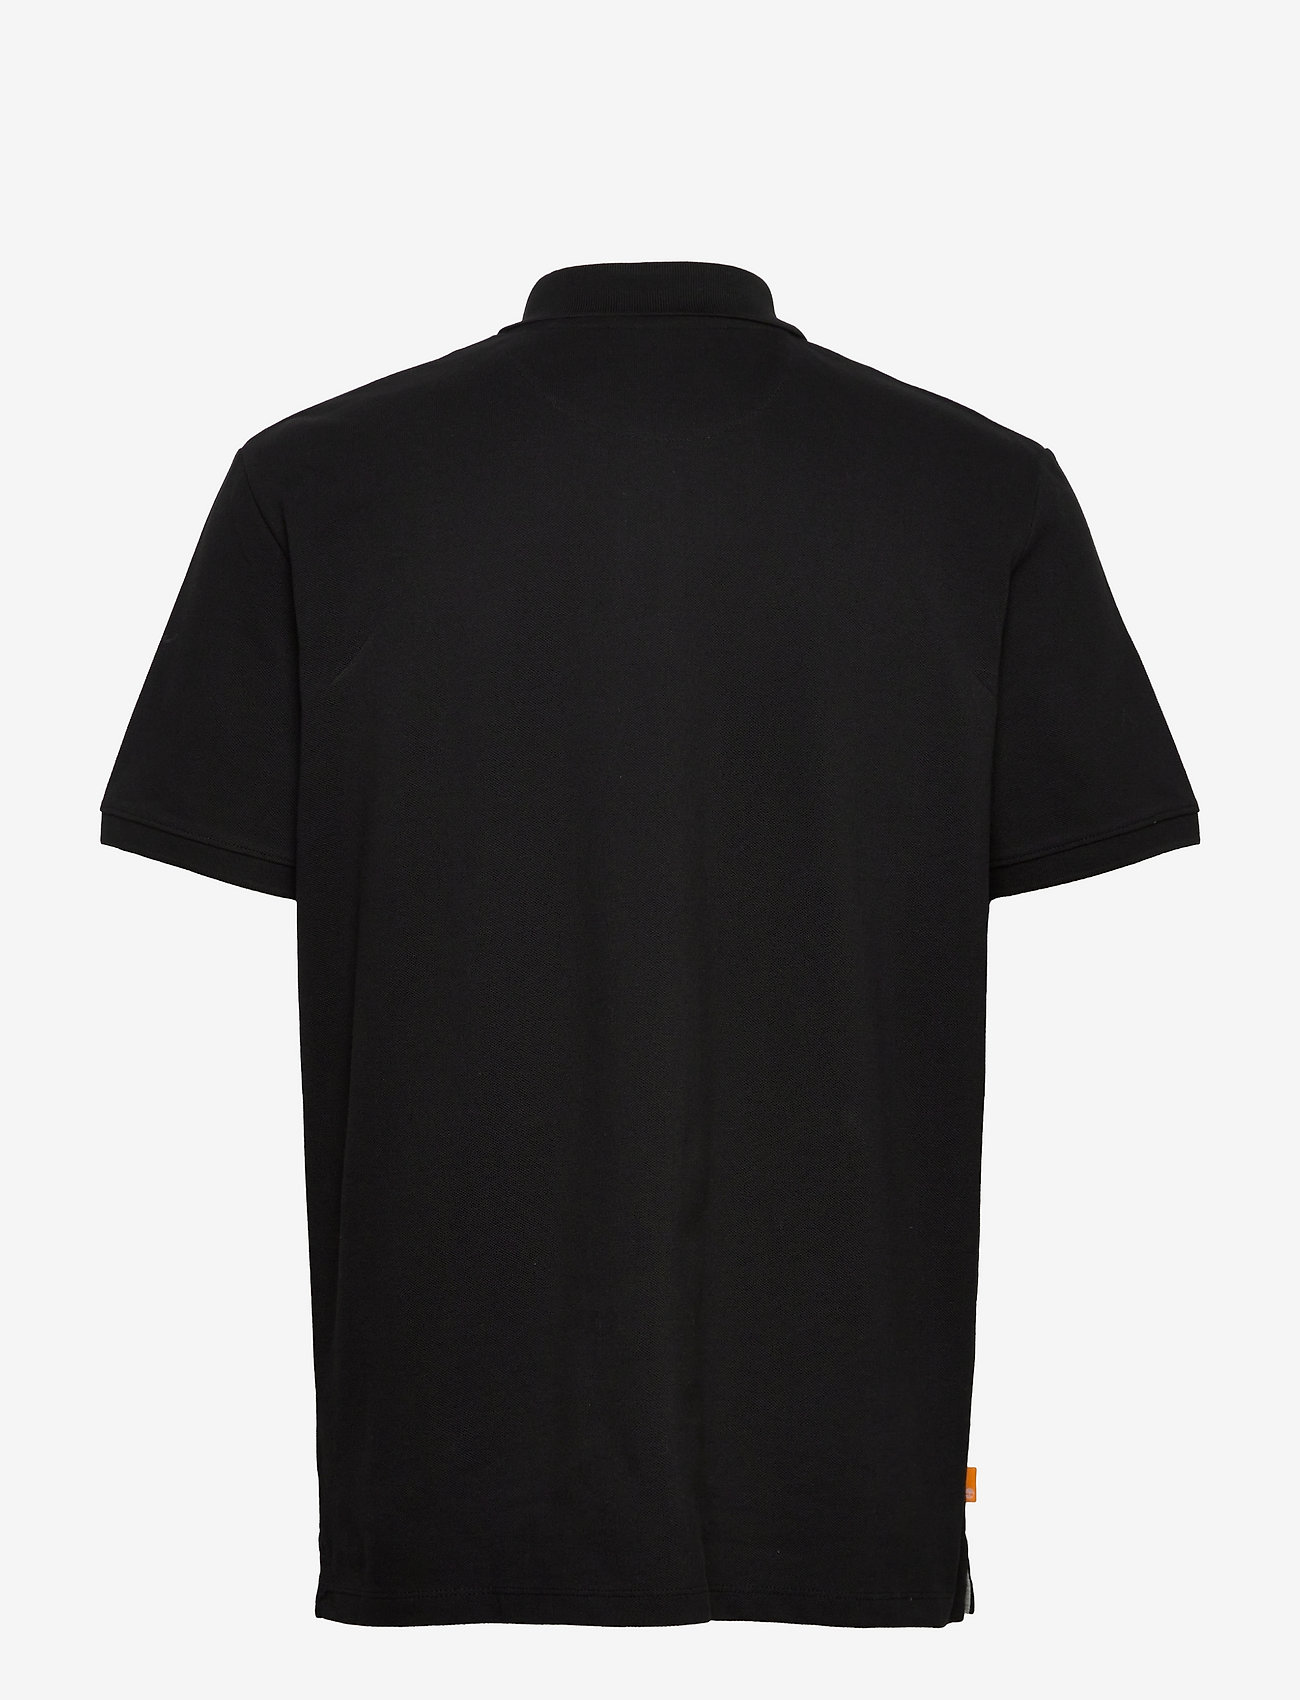 Timberland - MILLERS RIVER Pique Short Sleeve Polo BLACK - kurzärmelig - black - 1